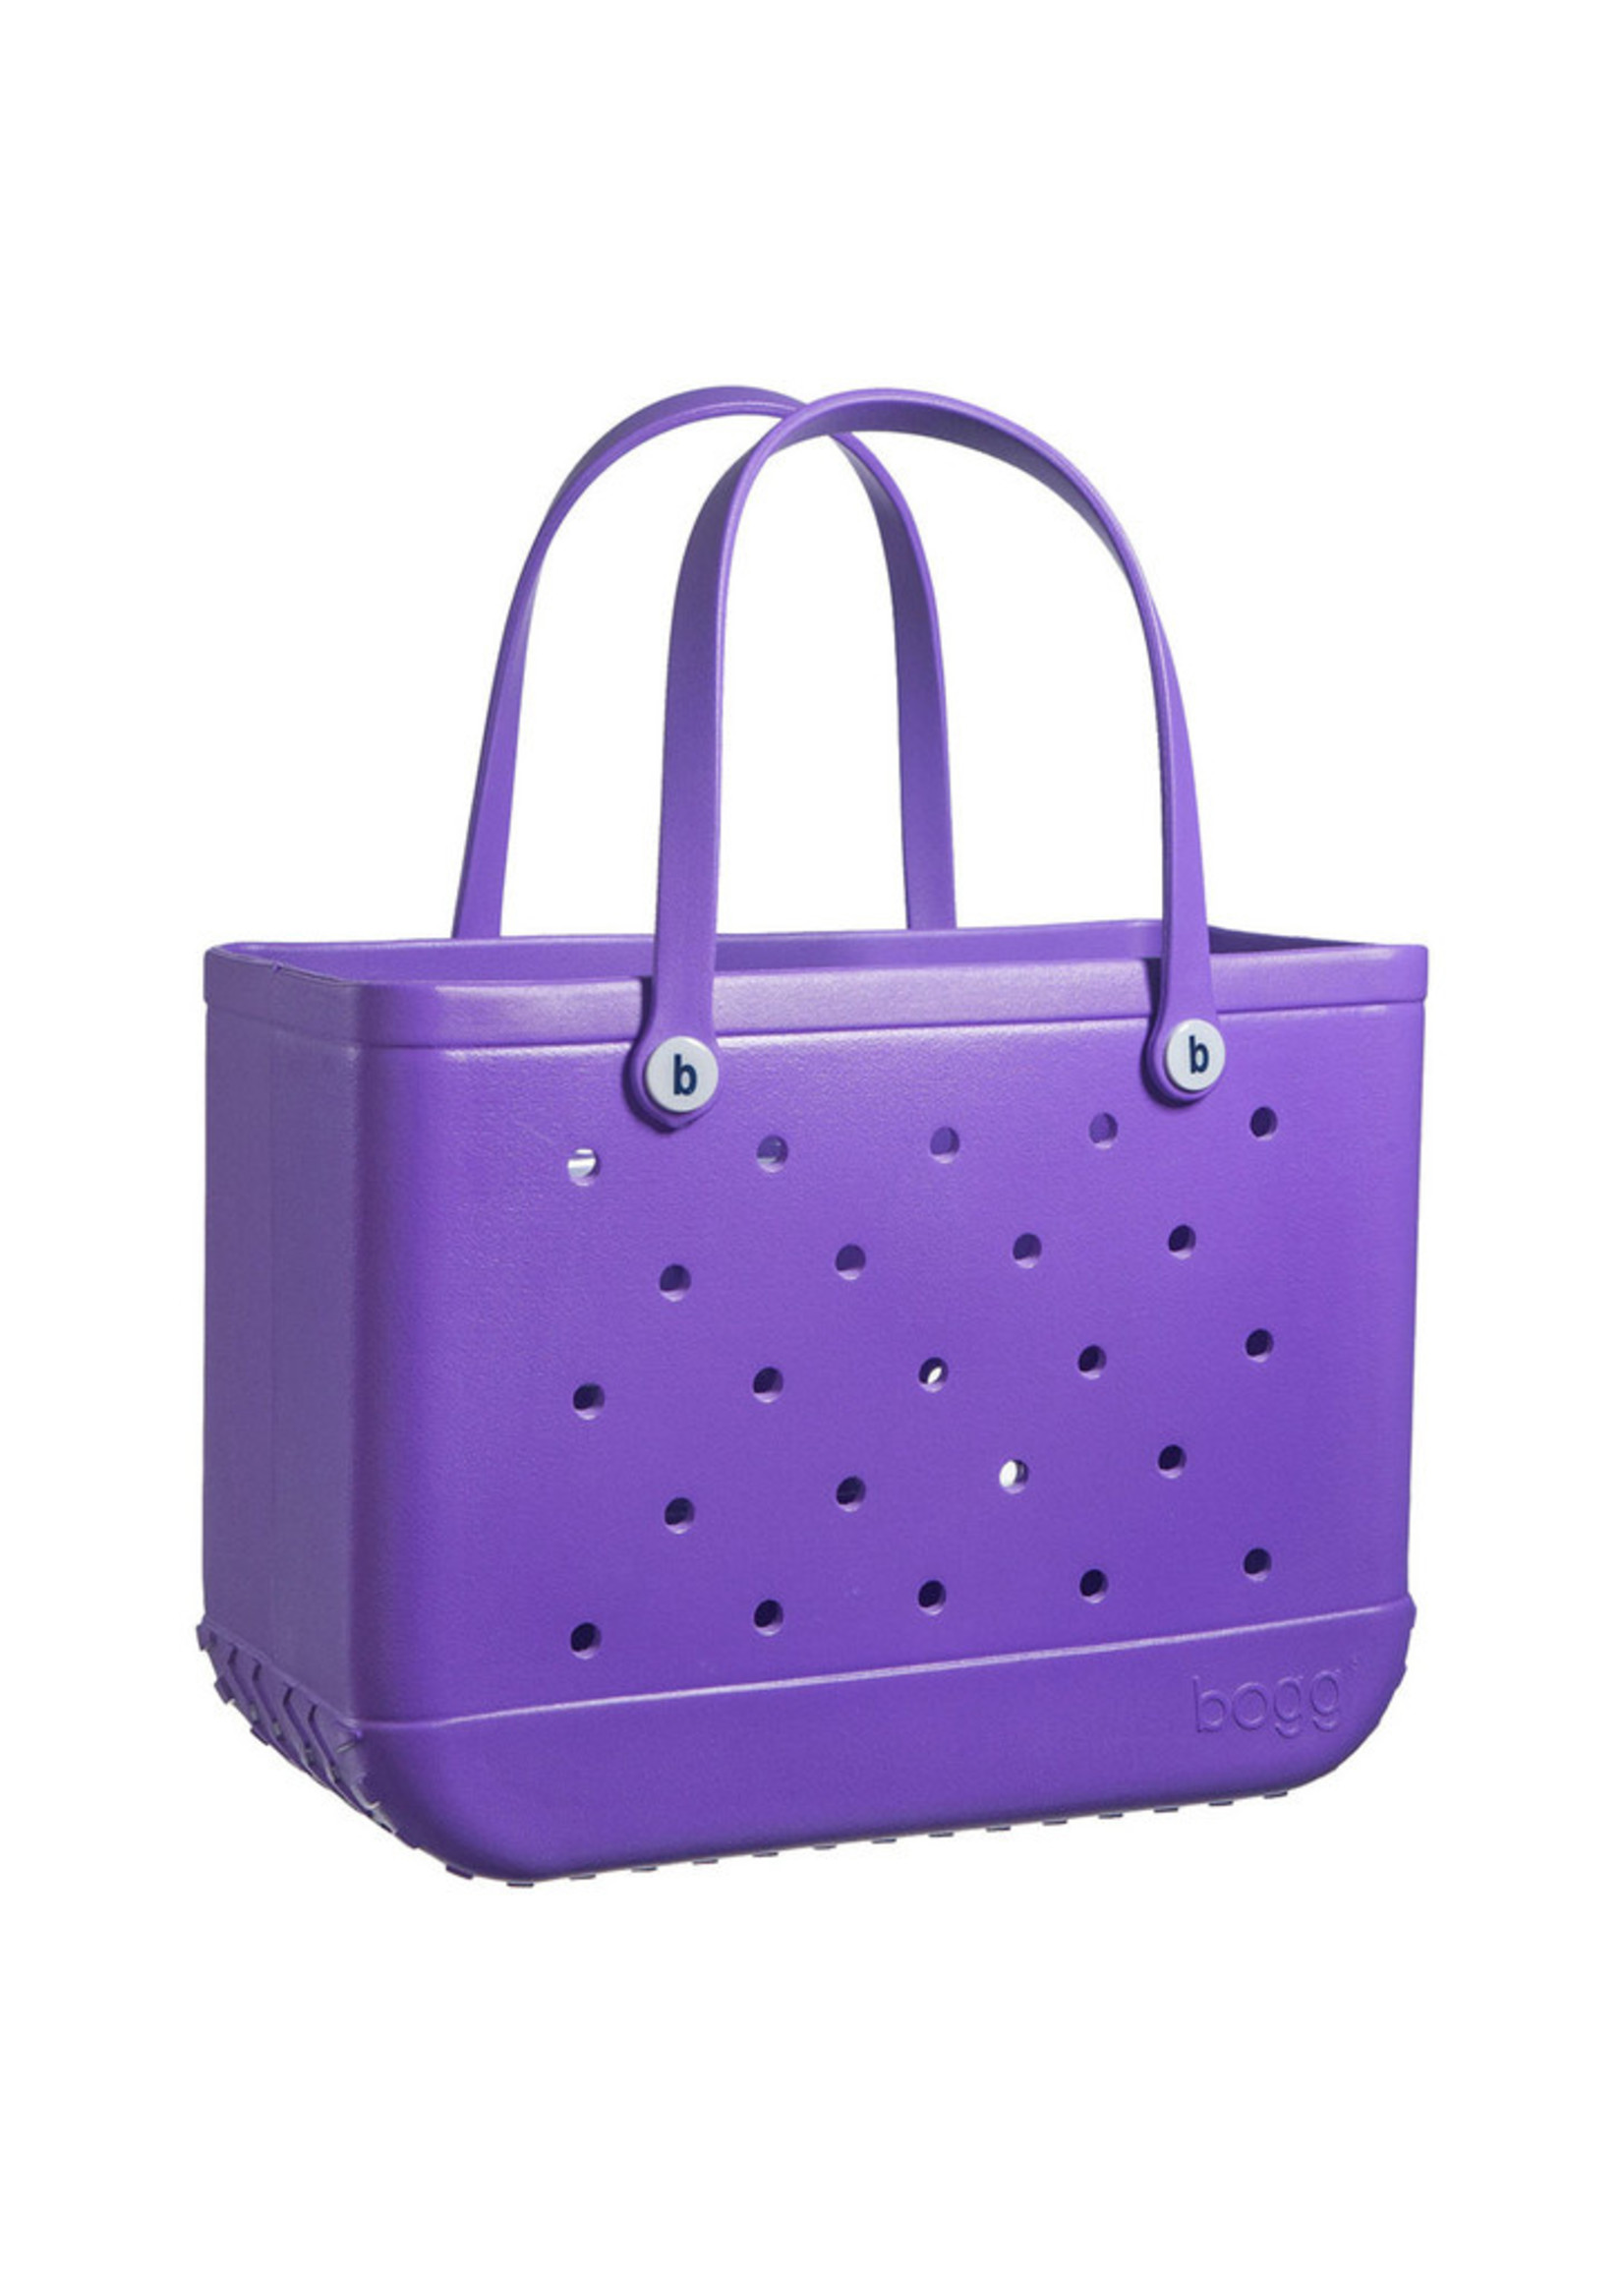 Bogg Bag Bogg Bag Purple Large Bag